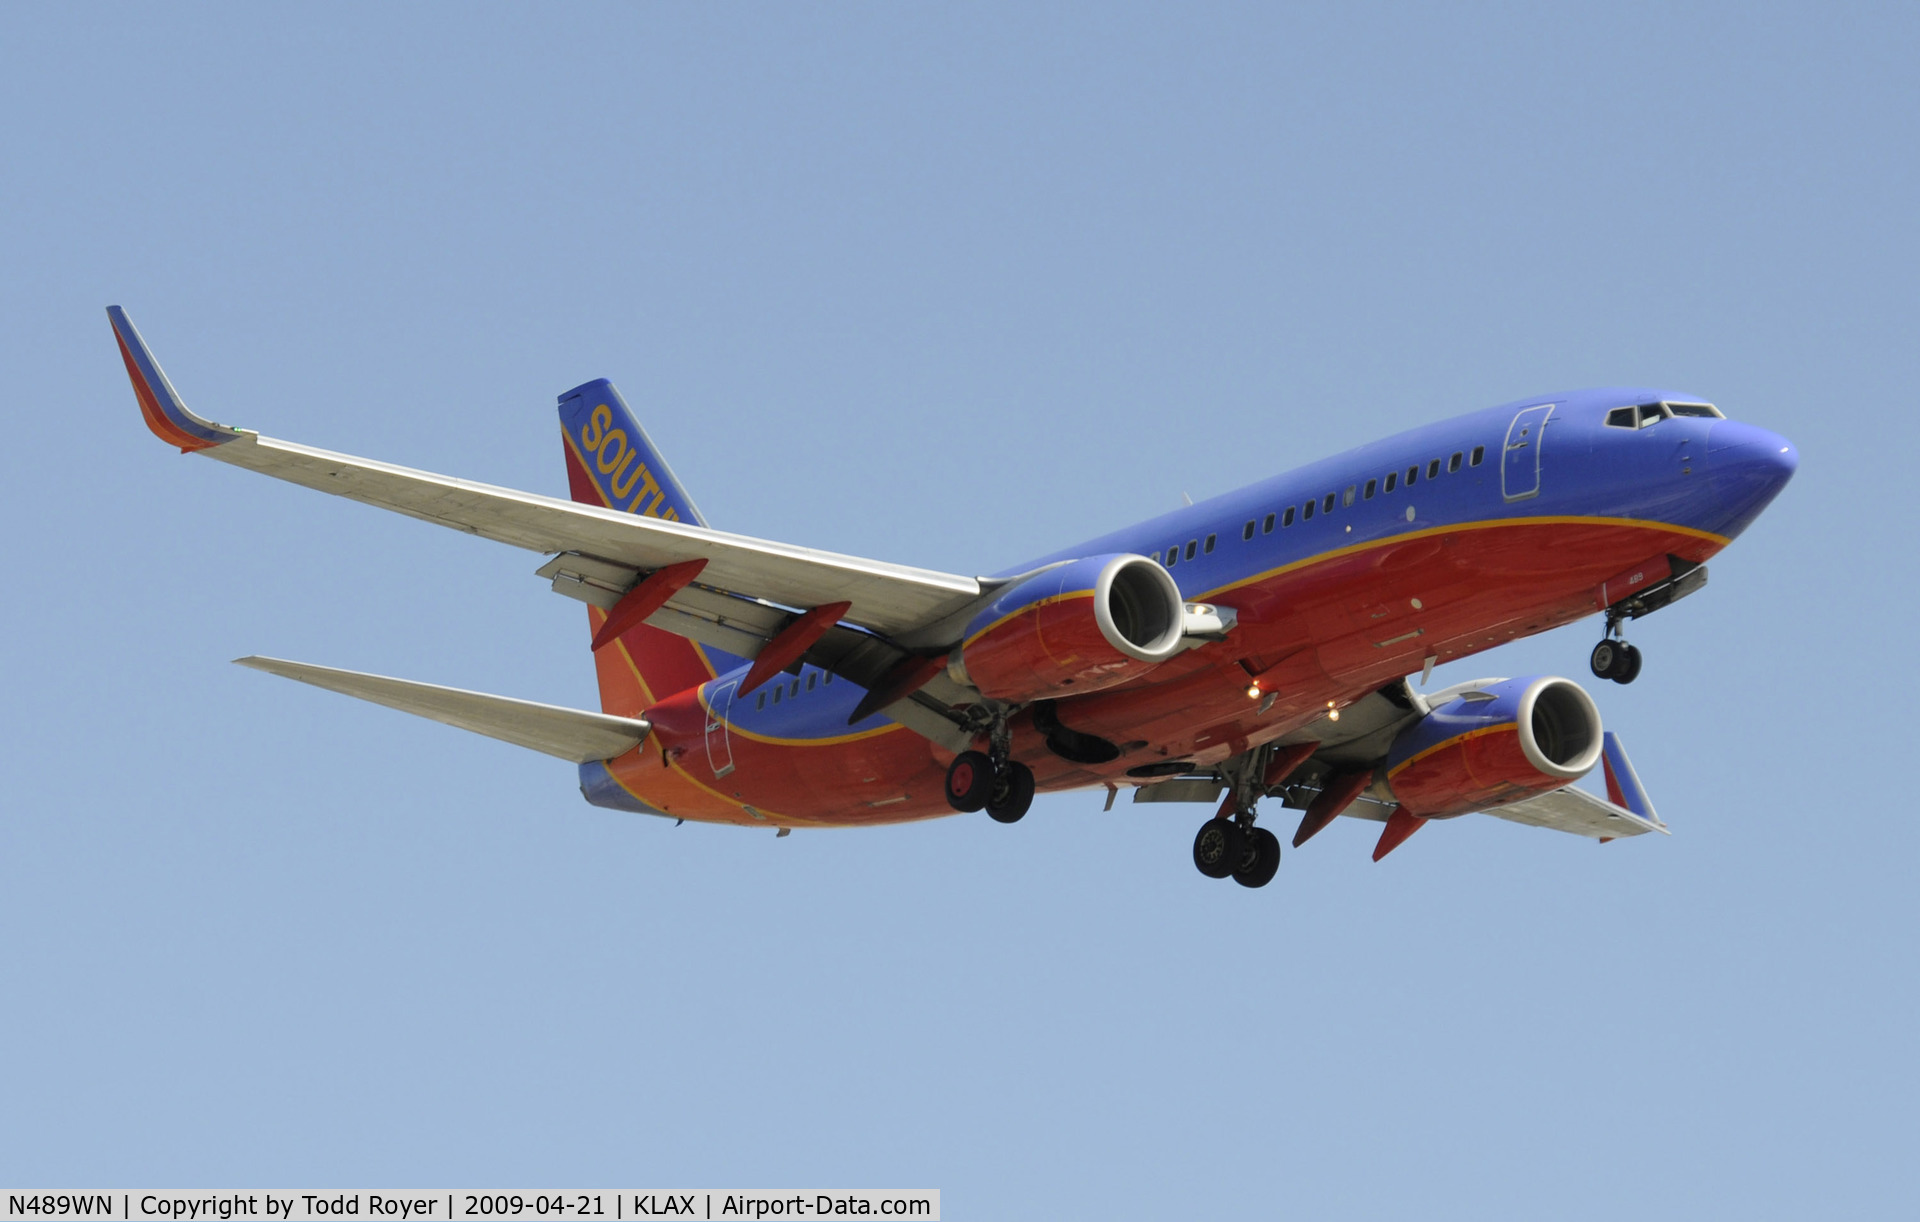 N489WN, 2004 Boeing 737-7H4 C/N 33855, Landing 24R at LAX